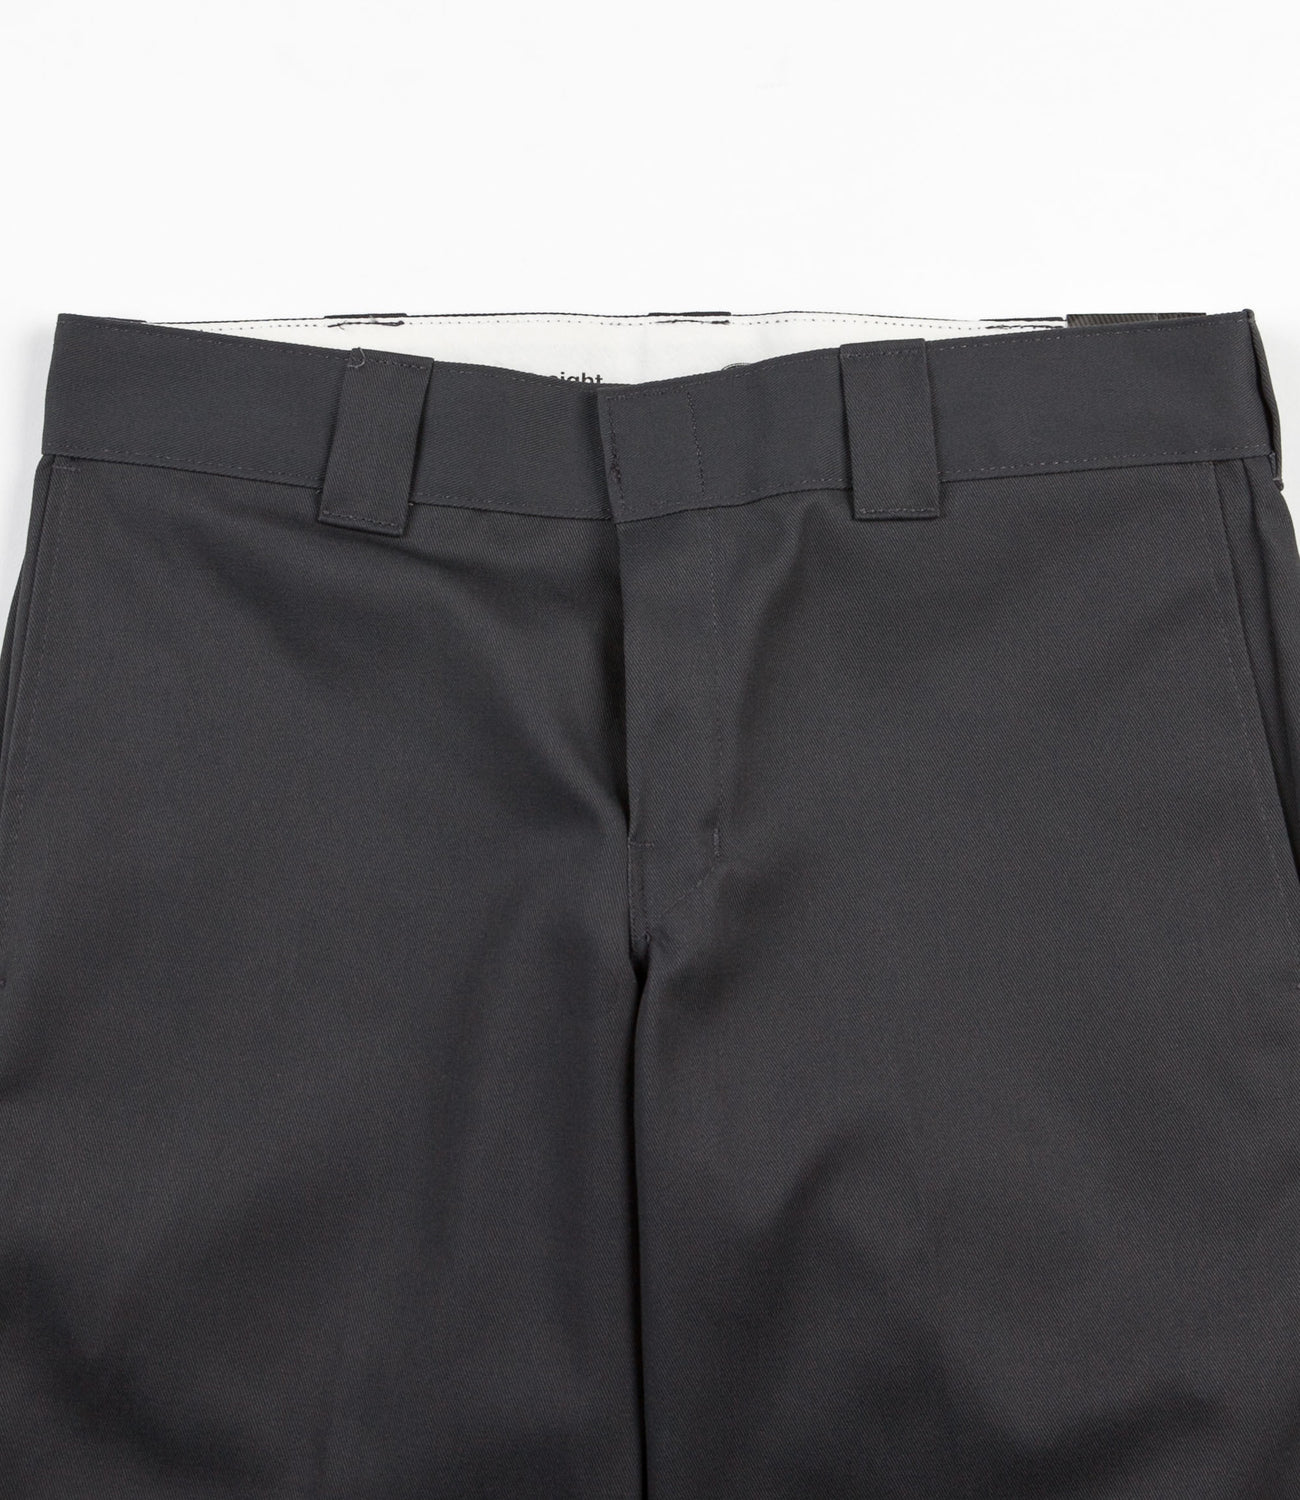 Dickies 873 Slim Straight Work Trousers - Charcoal Grey | Flatspot